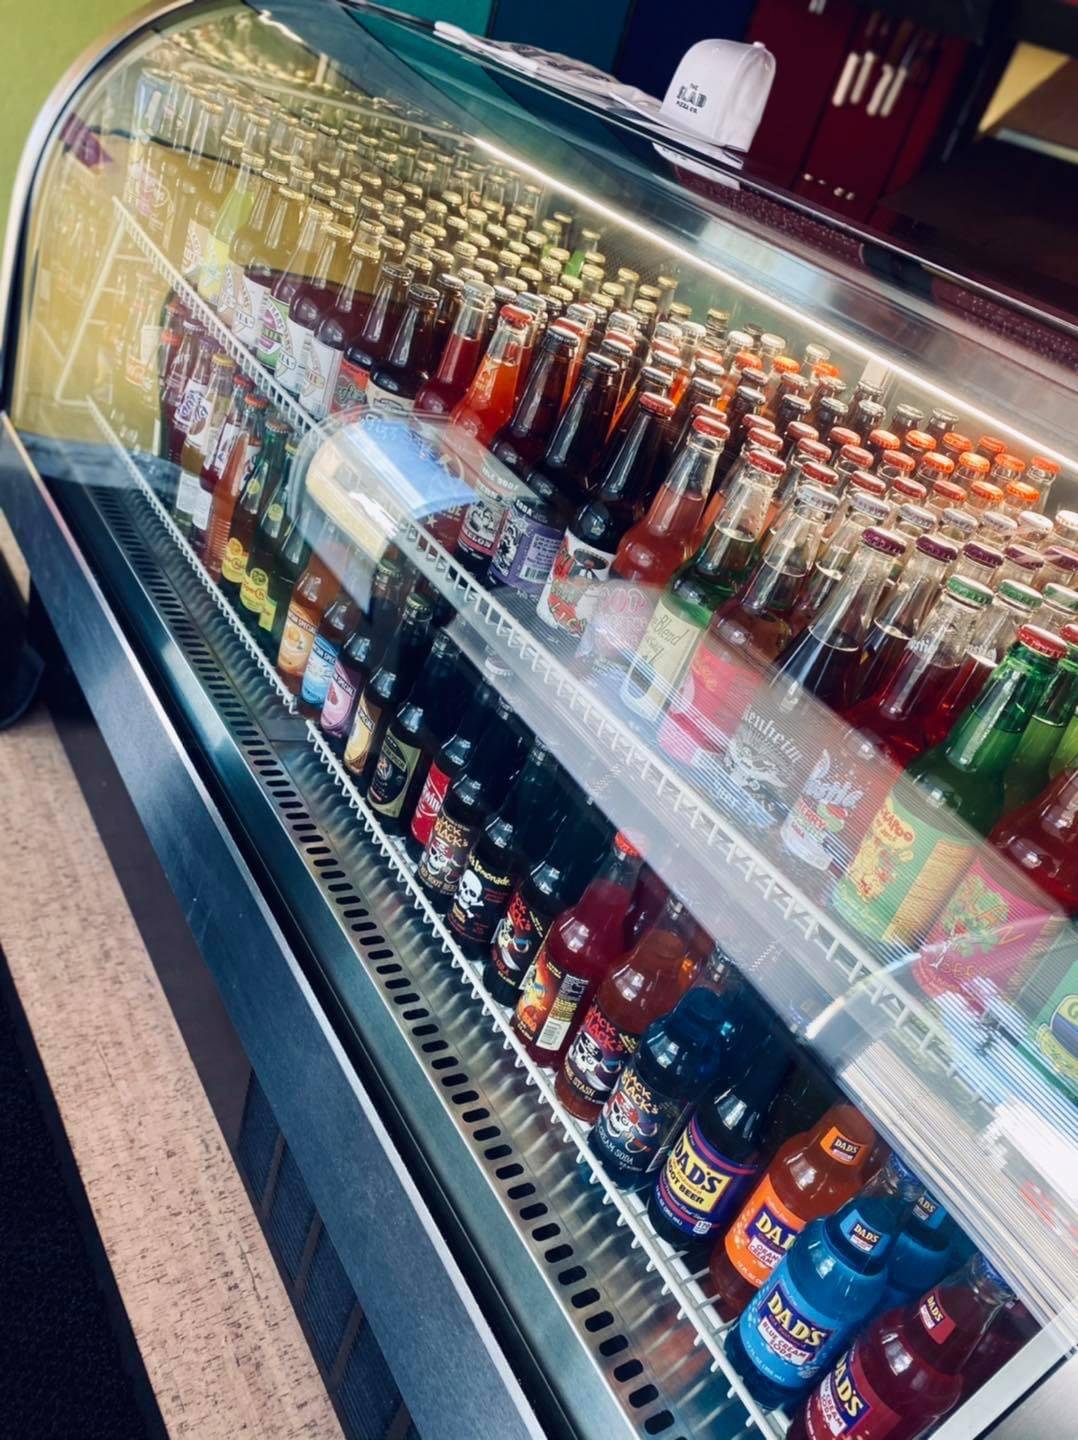 So many *vintage sodas to choose from. (courtesy photo)